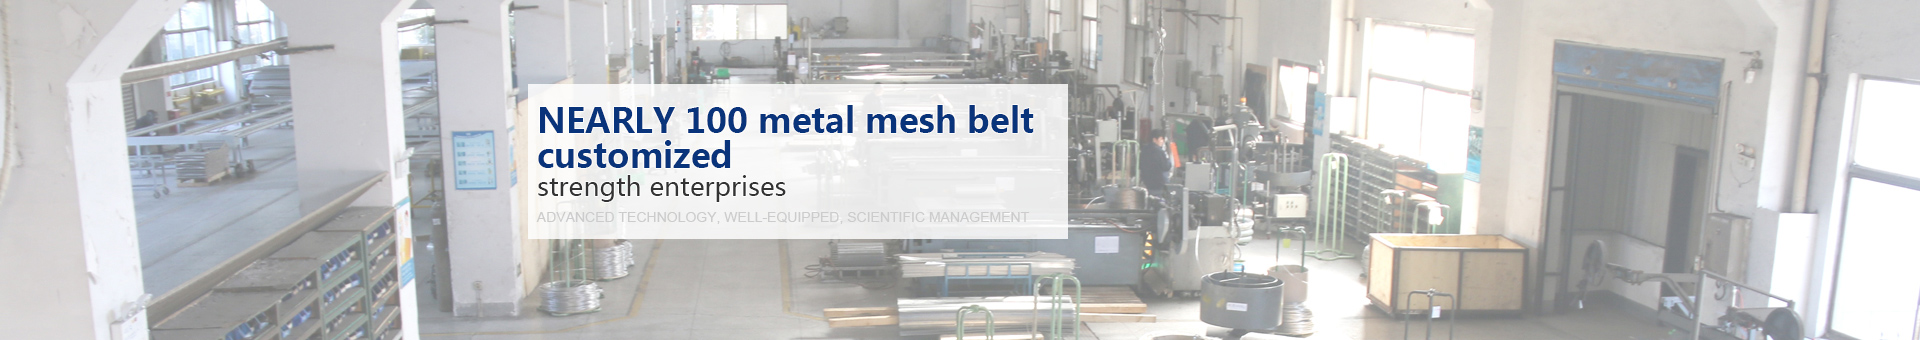 Kansai metal mesh technology